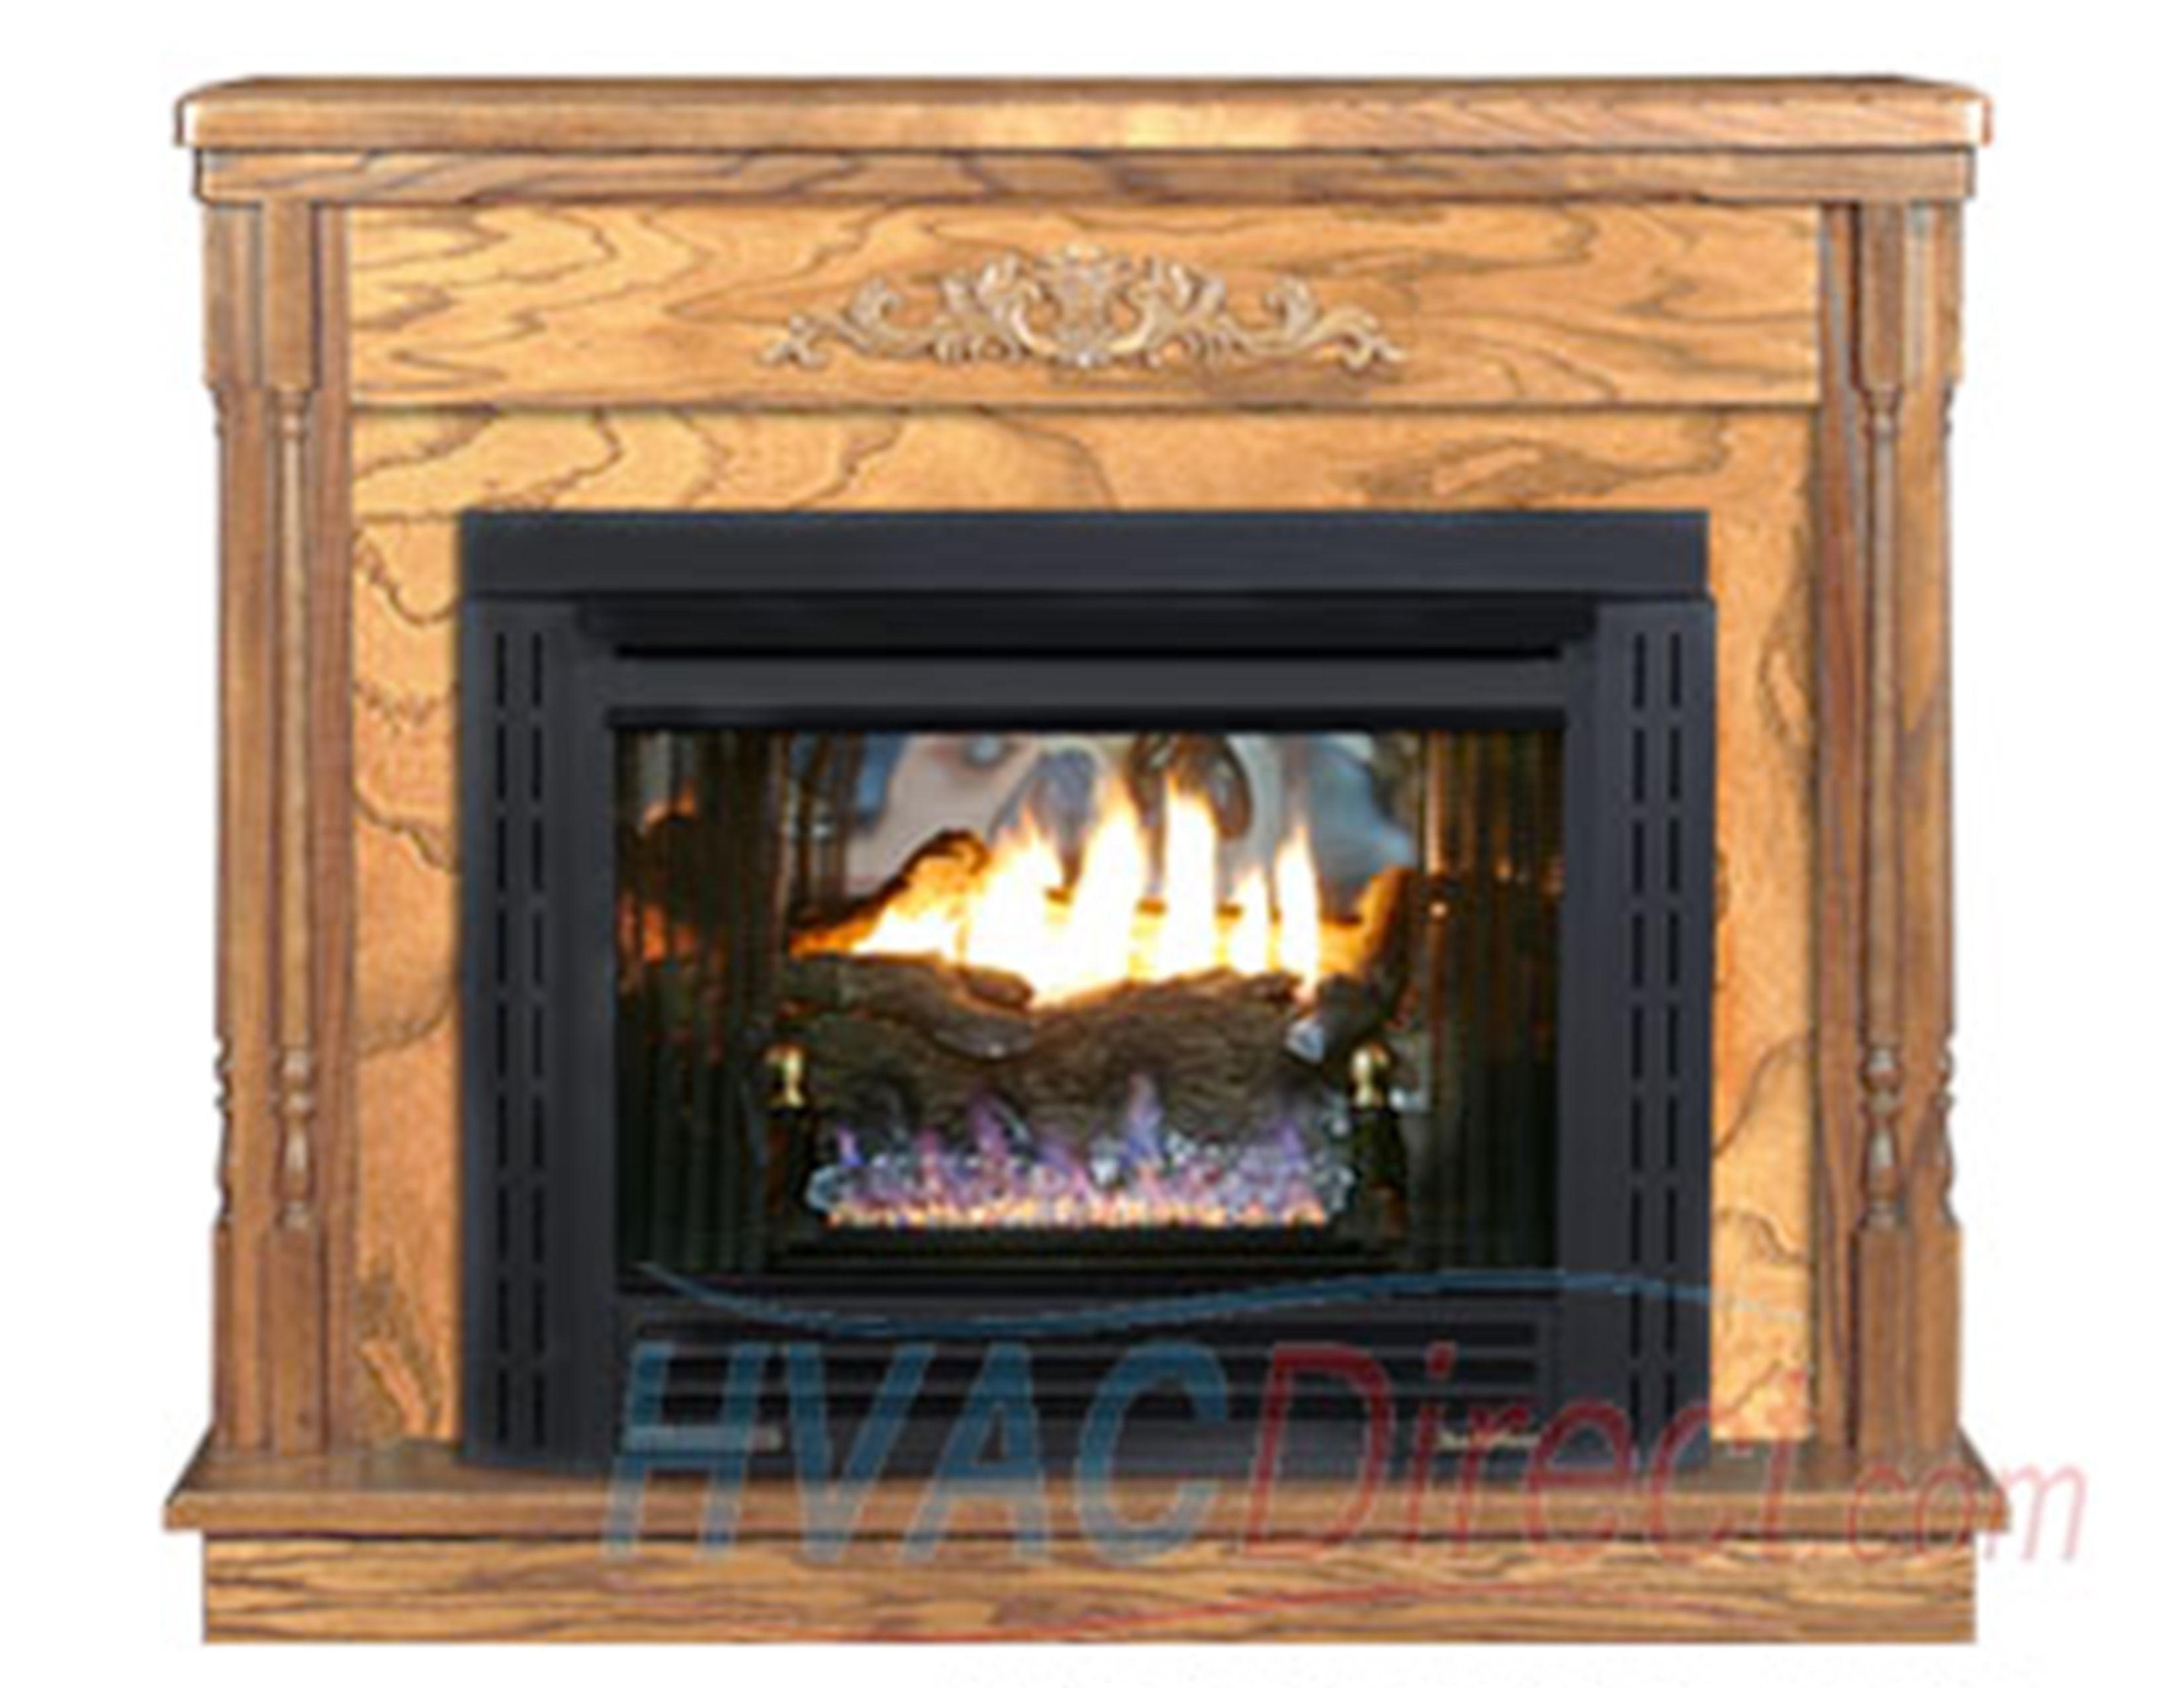 Natural Gas Corner Fireplace Luxury Buck Stove Model 34zc Zero Clearance Vent Free Gas Fireplace